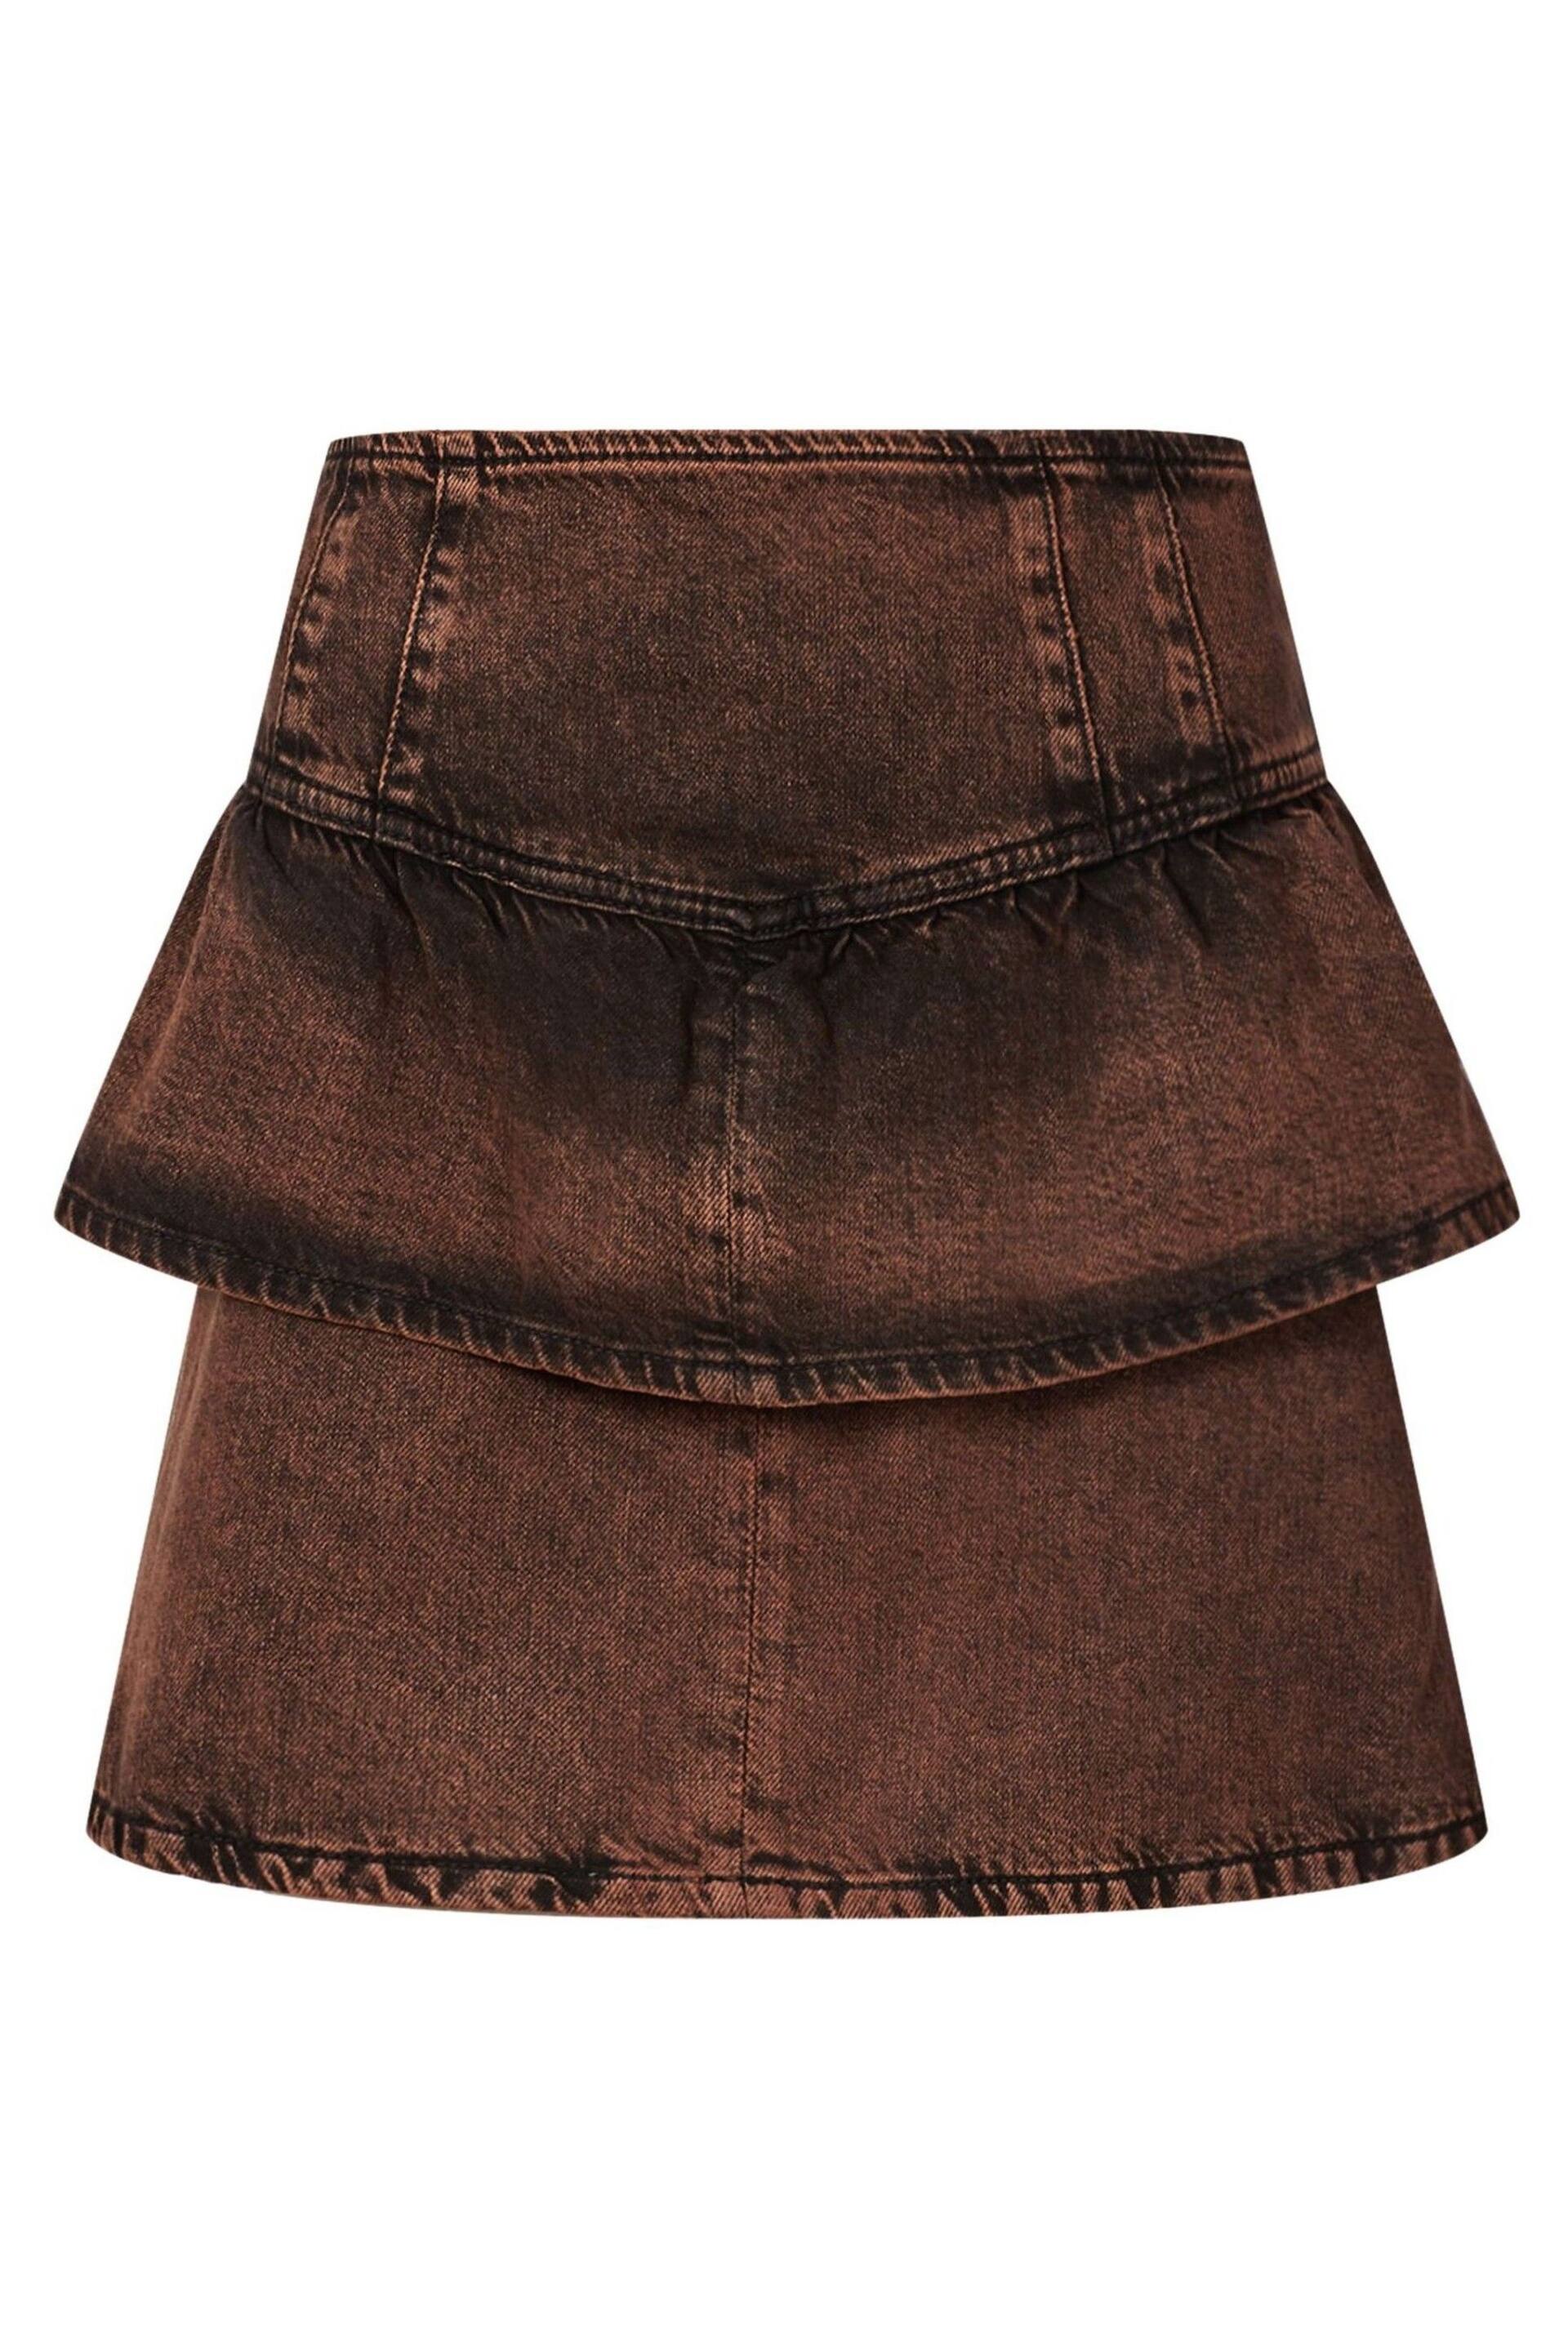 AllSaints Brown Andy Denim Skirt - Image 5 of 5